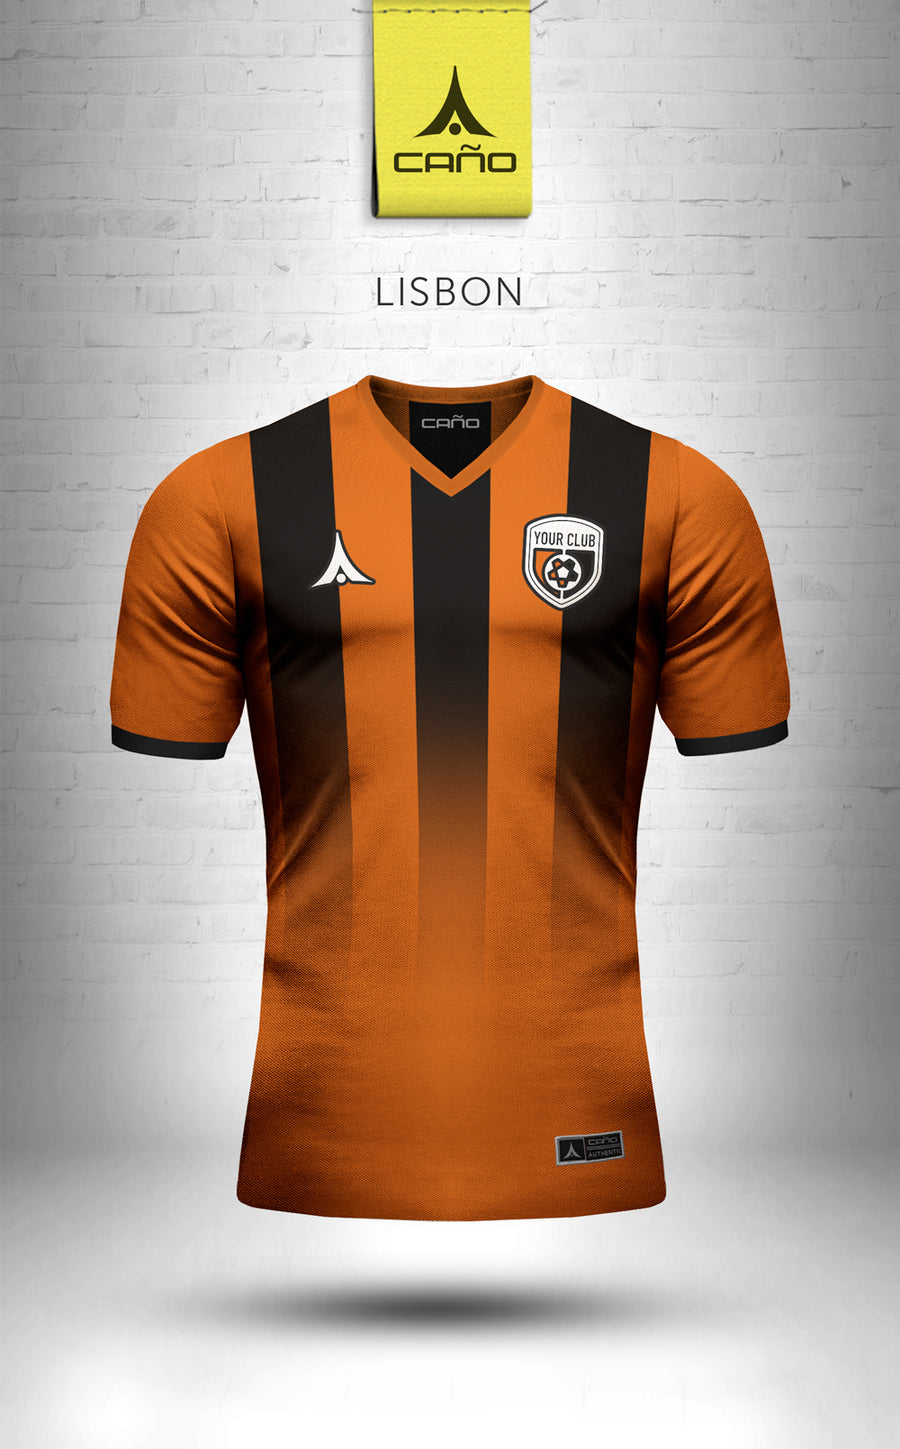 Lisbon in orange/black